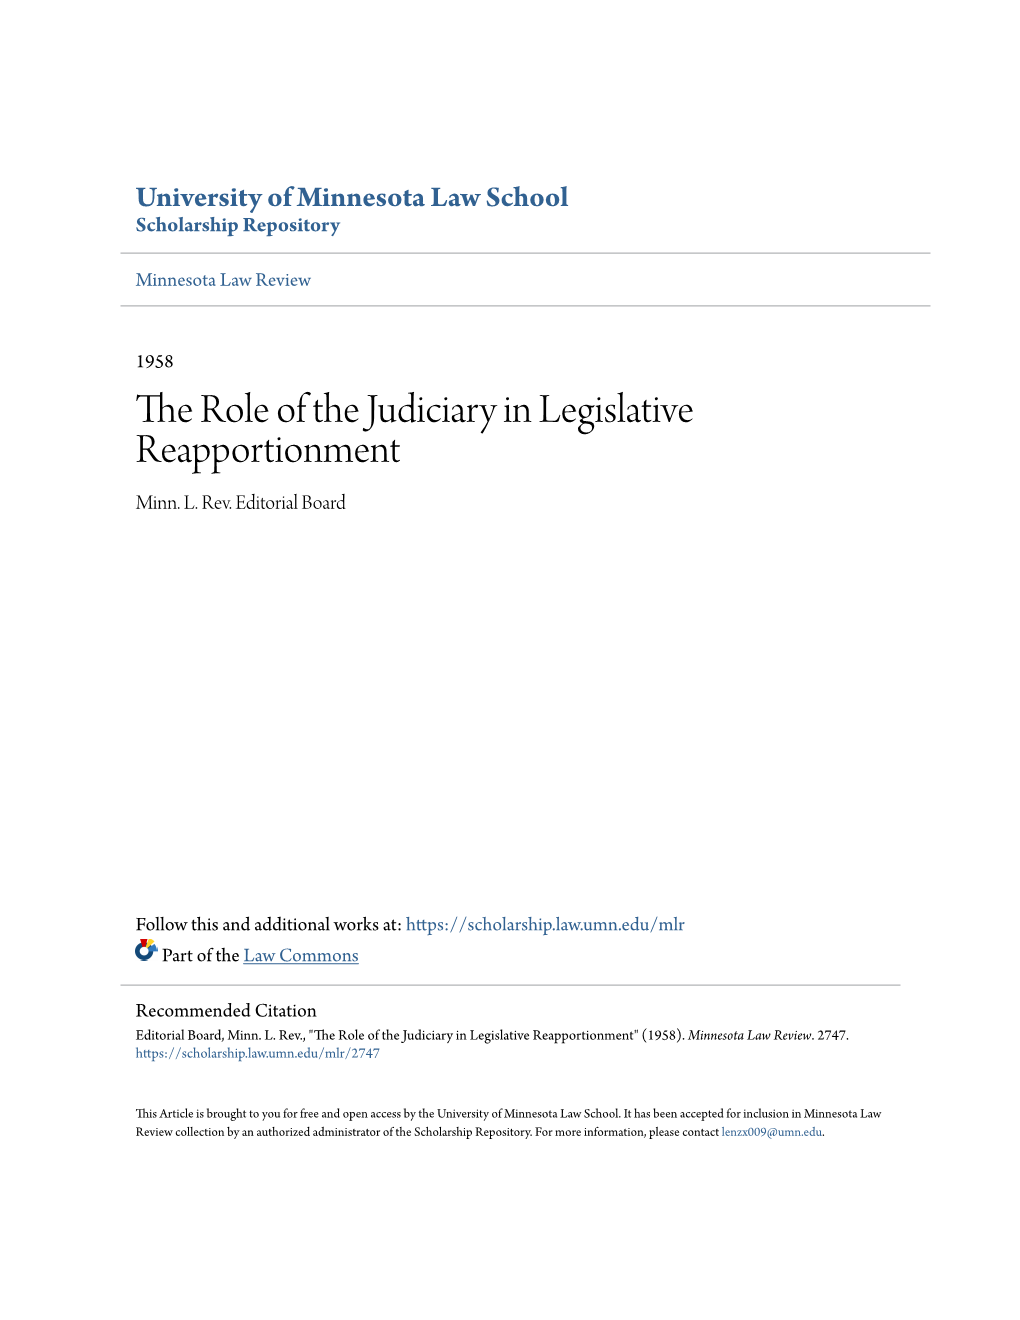 The Role of the Judiciary in Legislative Reapportionment Minn